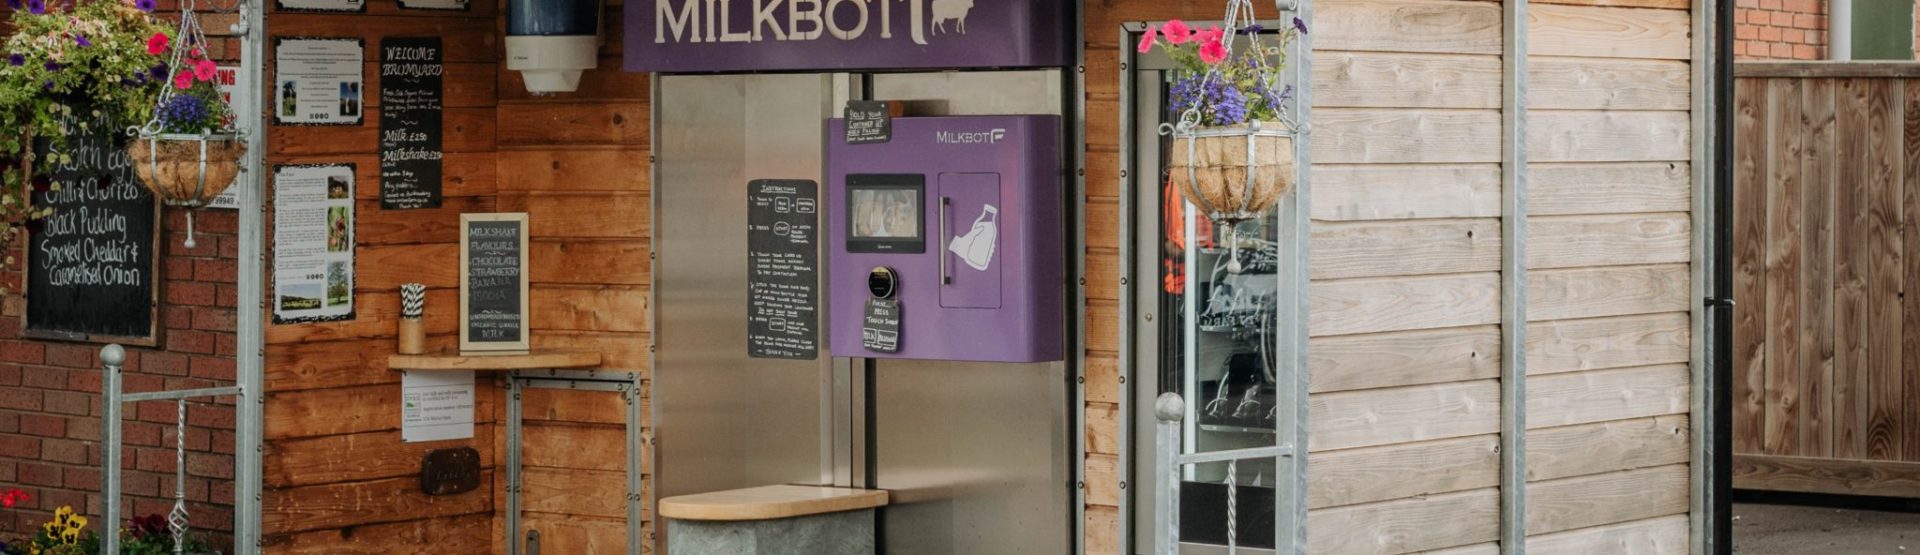 Milk vending machine in Worcestershire/Herefordshire